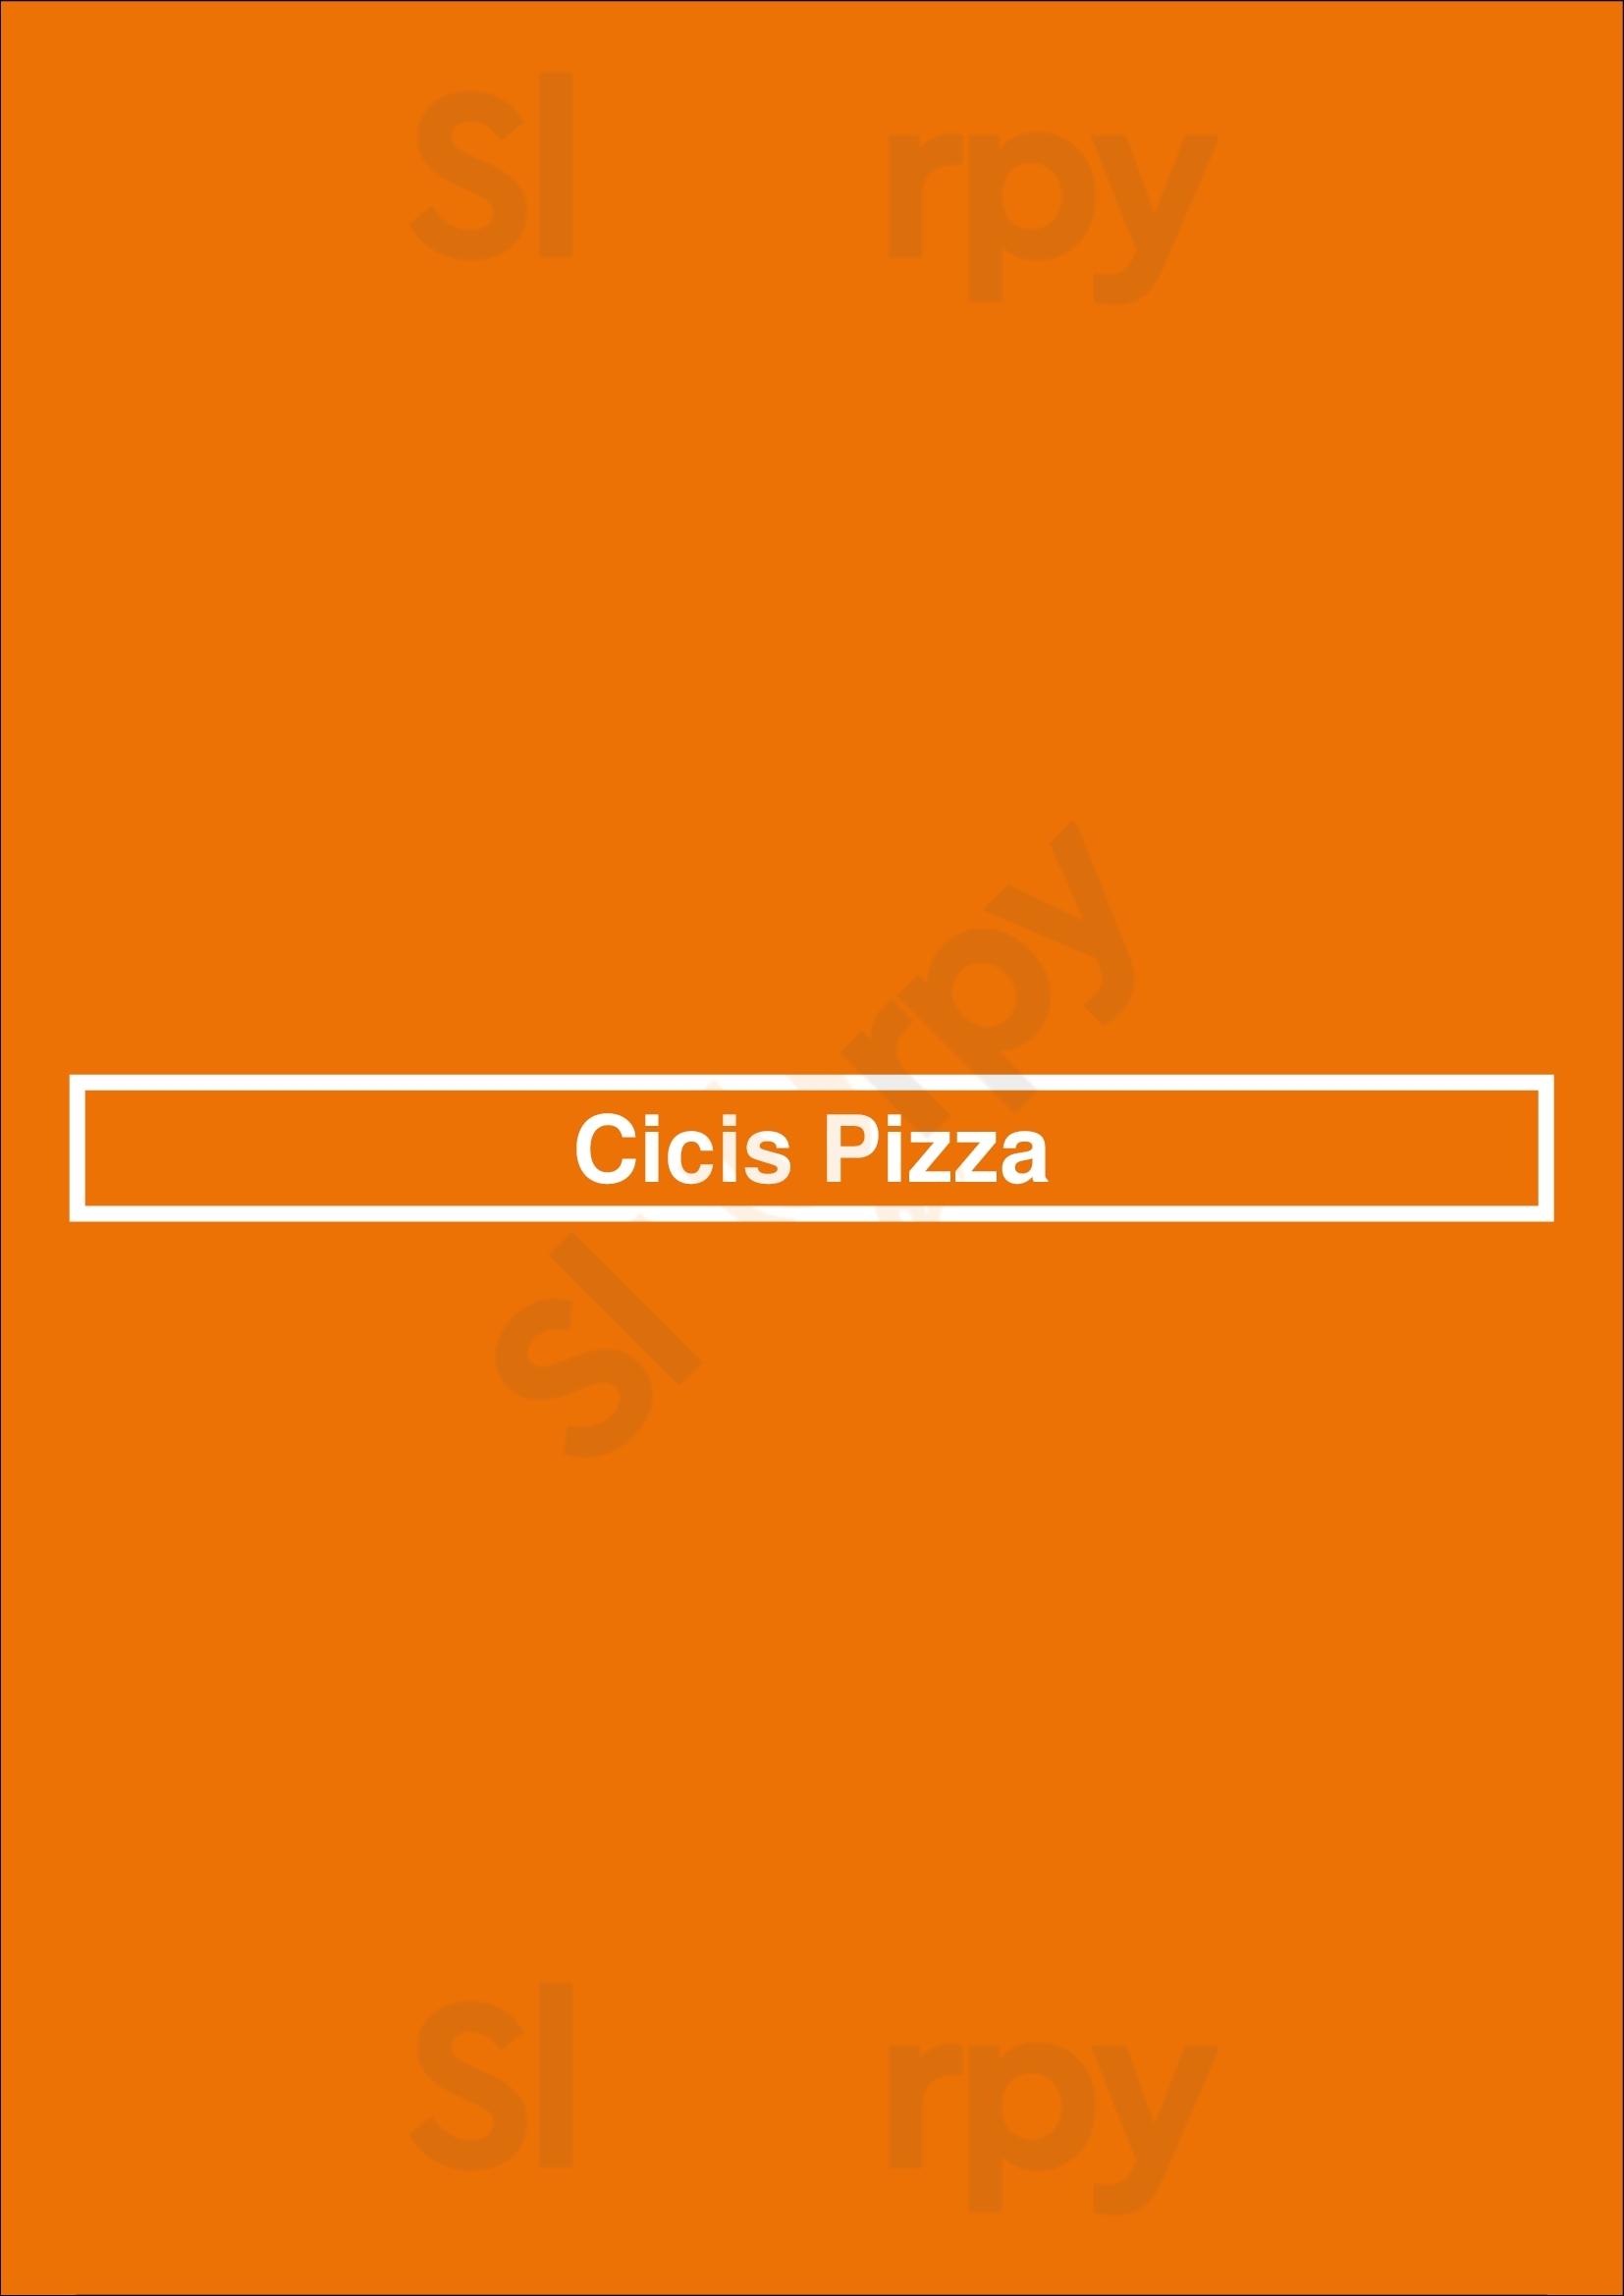 Cicis Pizza Fort Worth Menu - 1